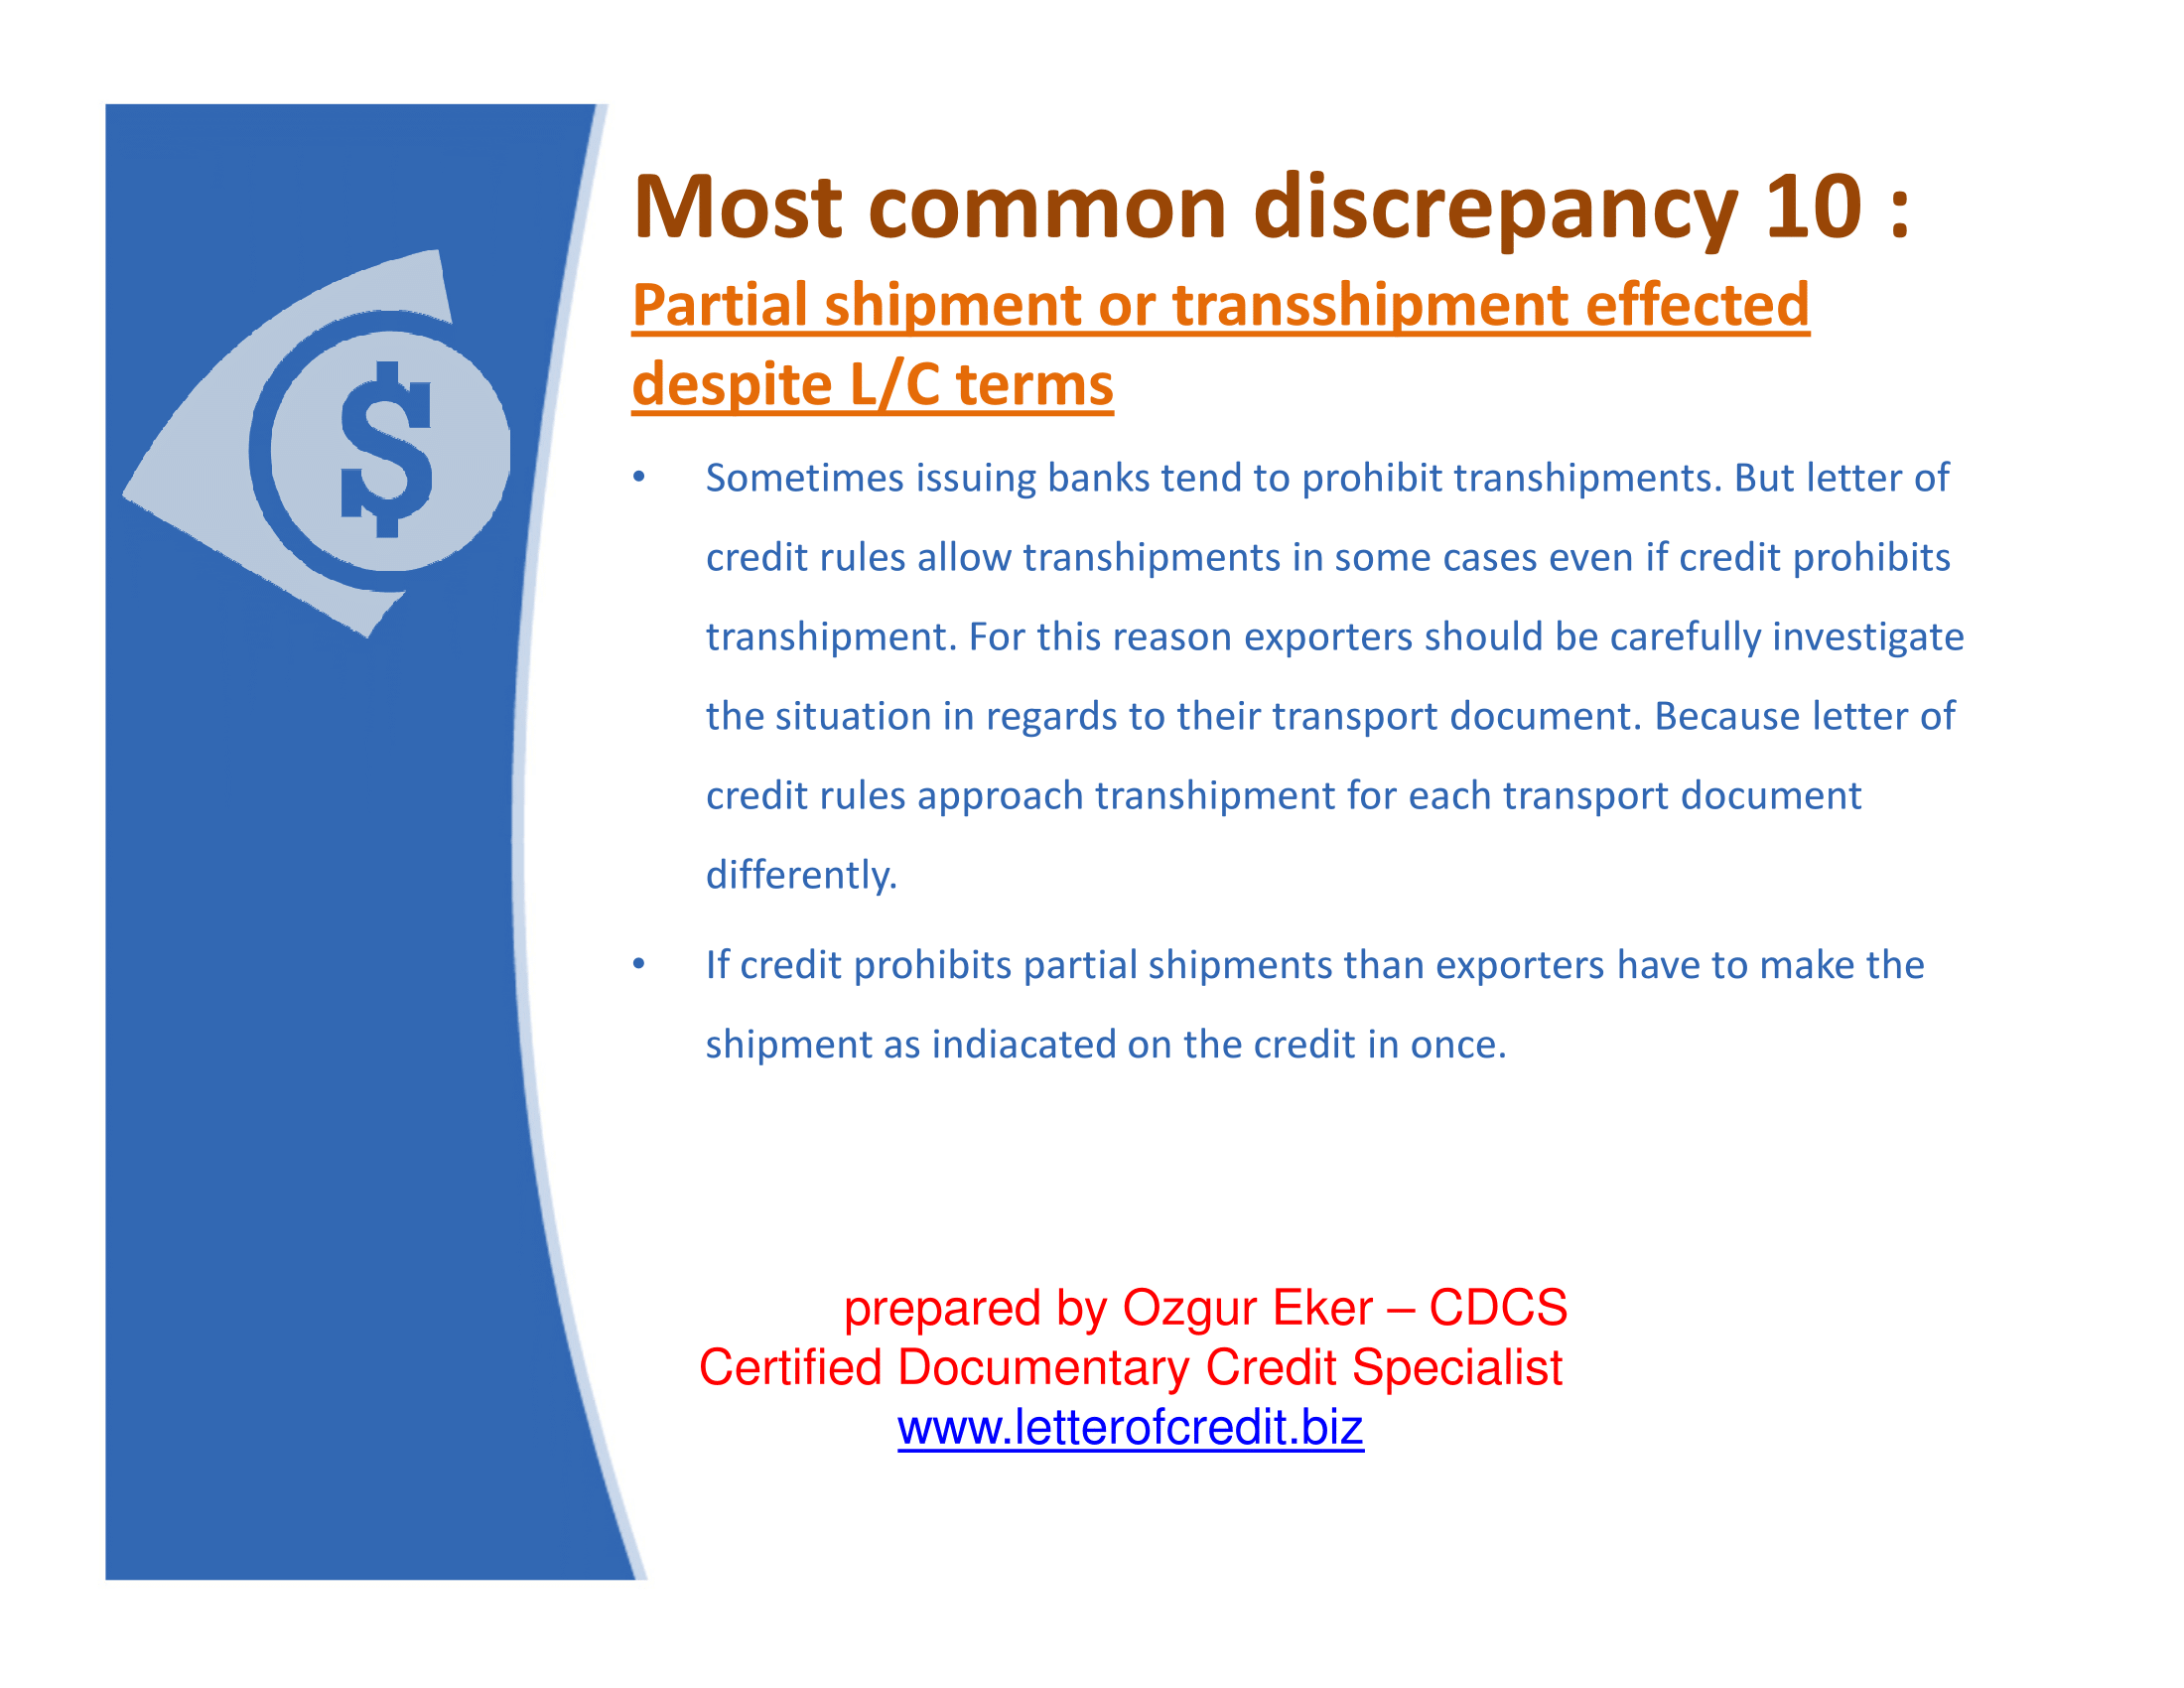 Partial shipment or transshipment effected despite L/C terms